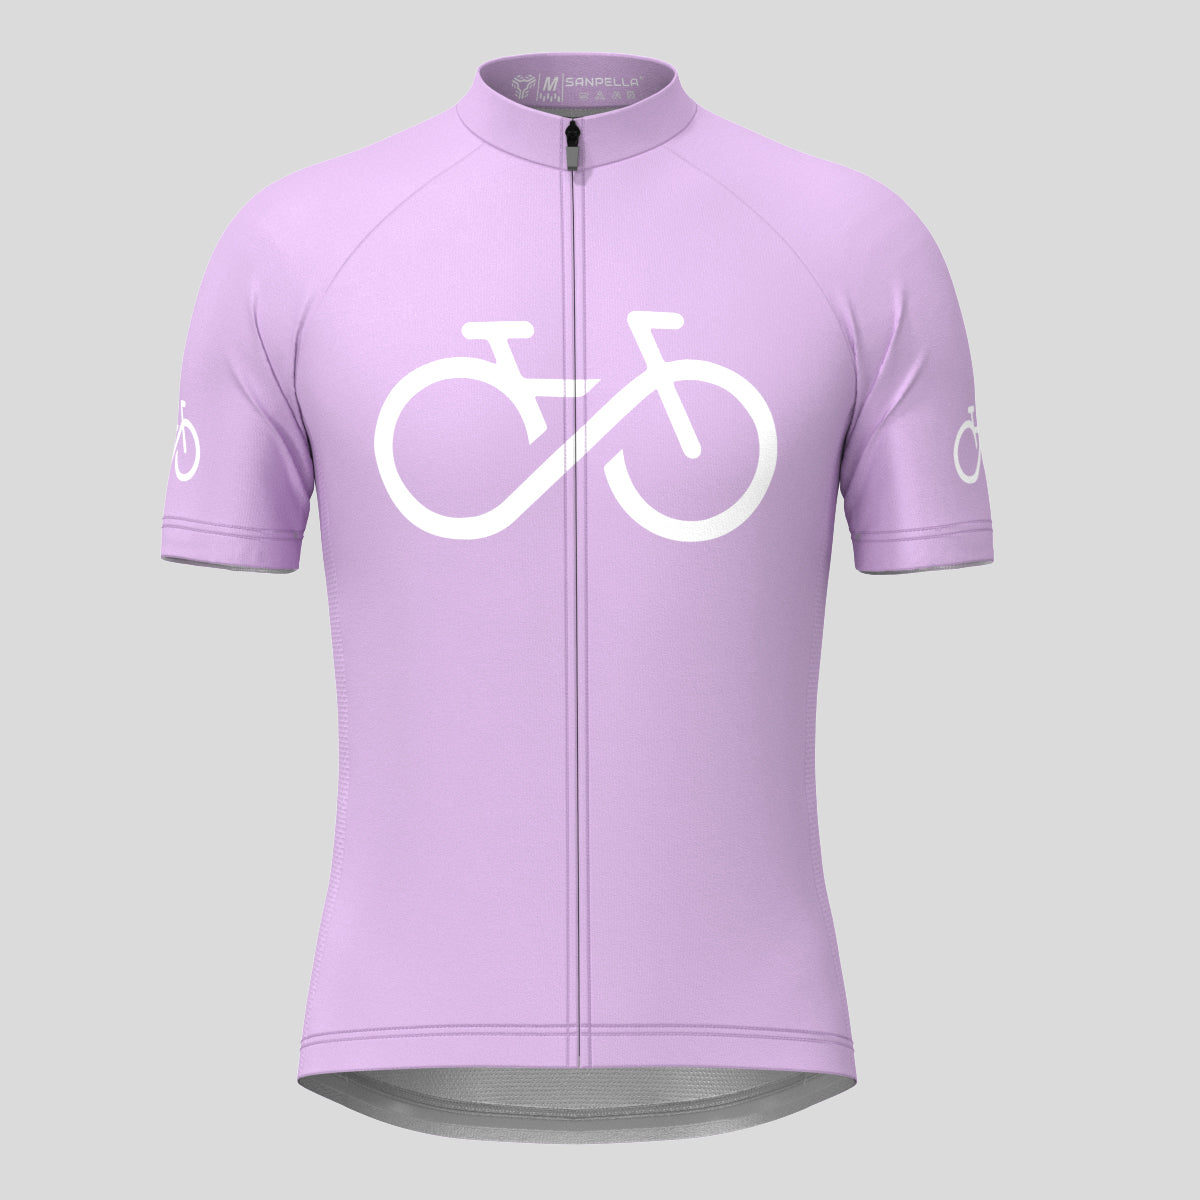 Bike Forever Men's Cycling Jersey -Haze